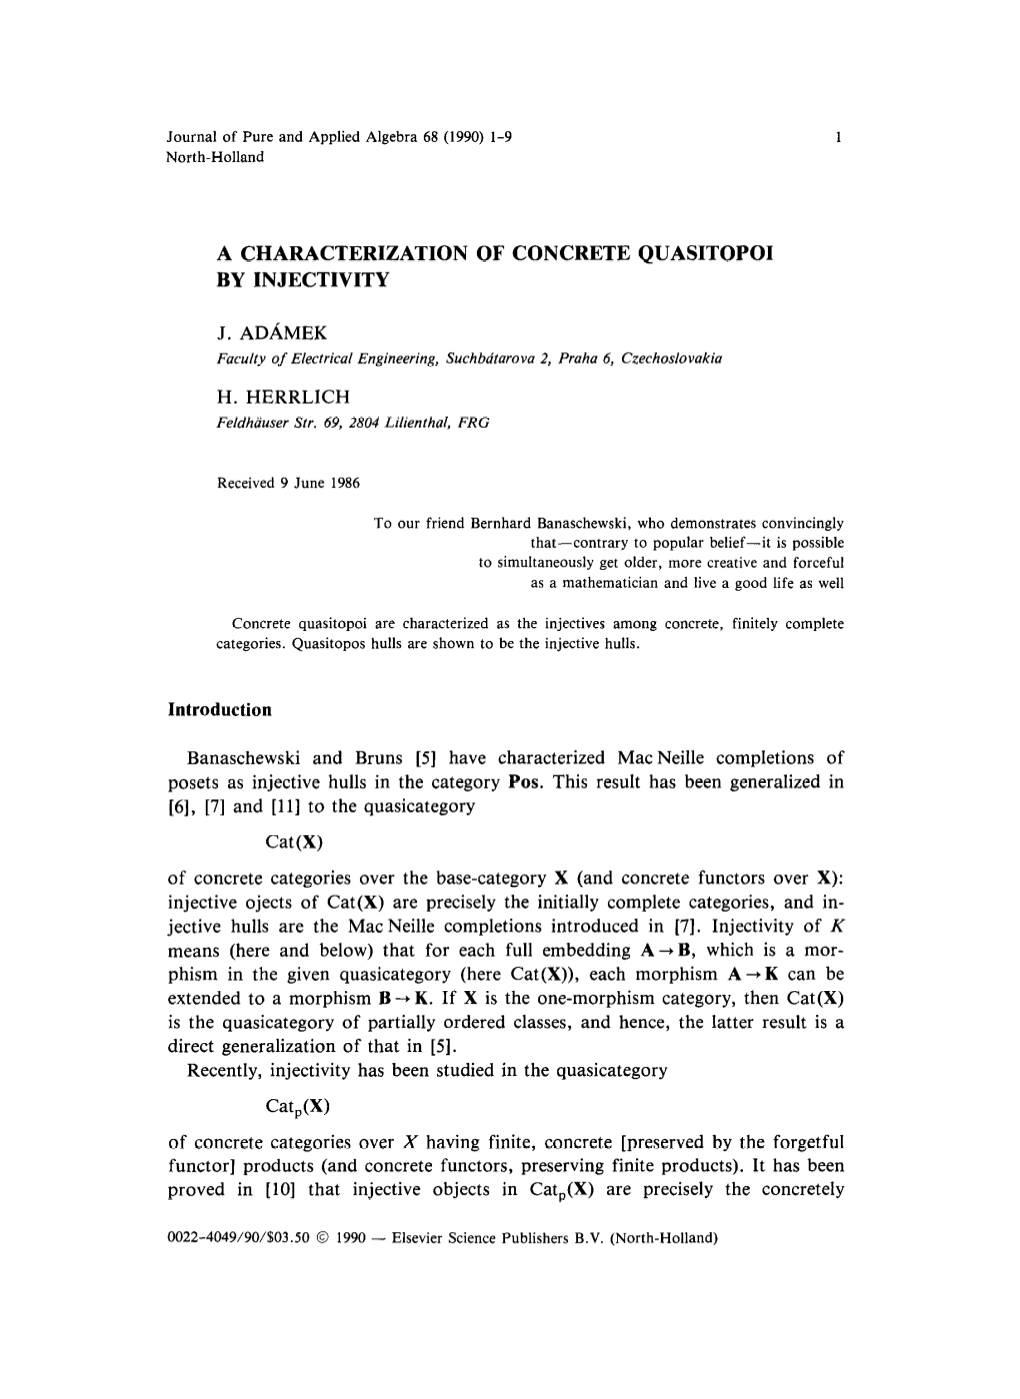 A Characterization of Concrete Quasitopoi by Injectivity